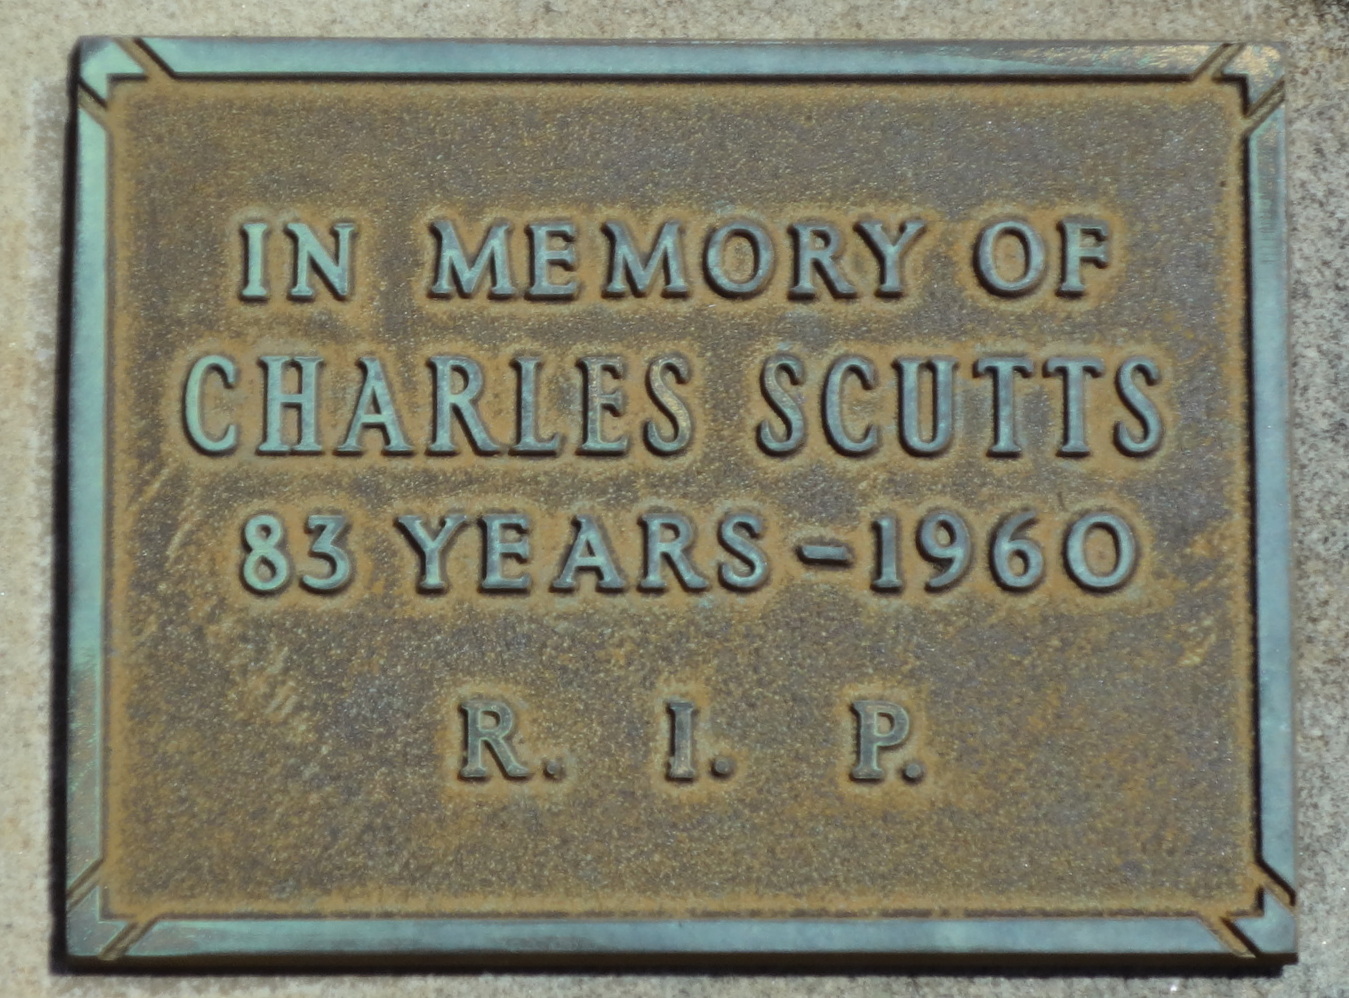 Charles Scutts